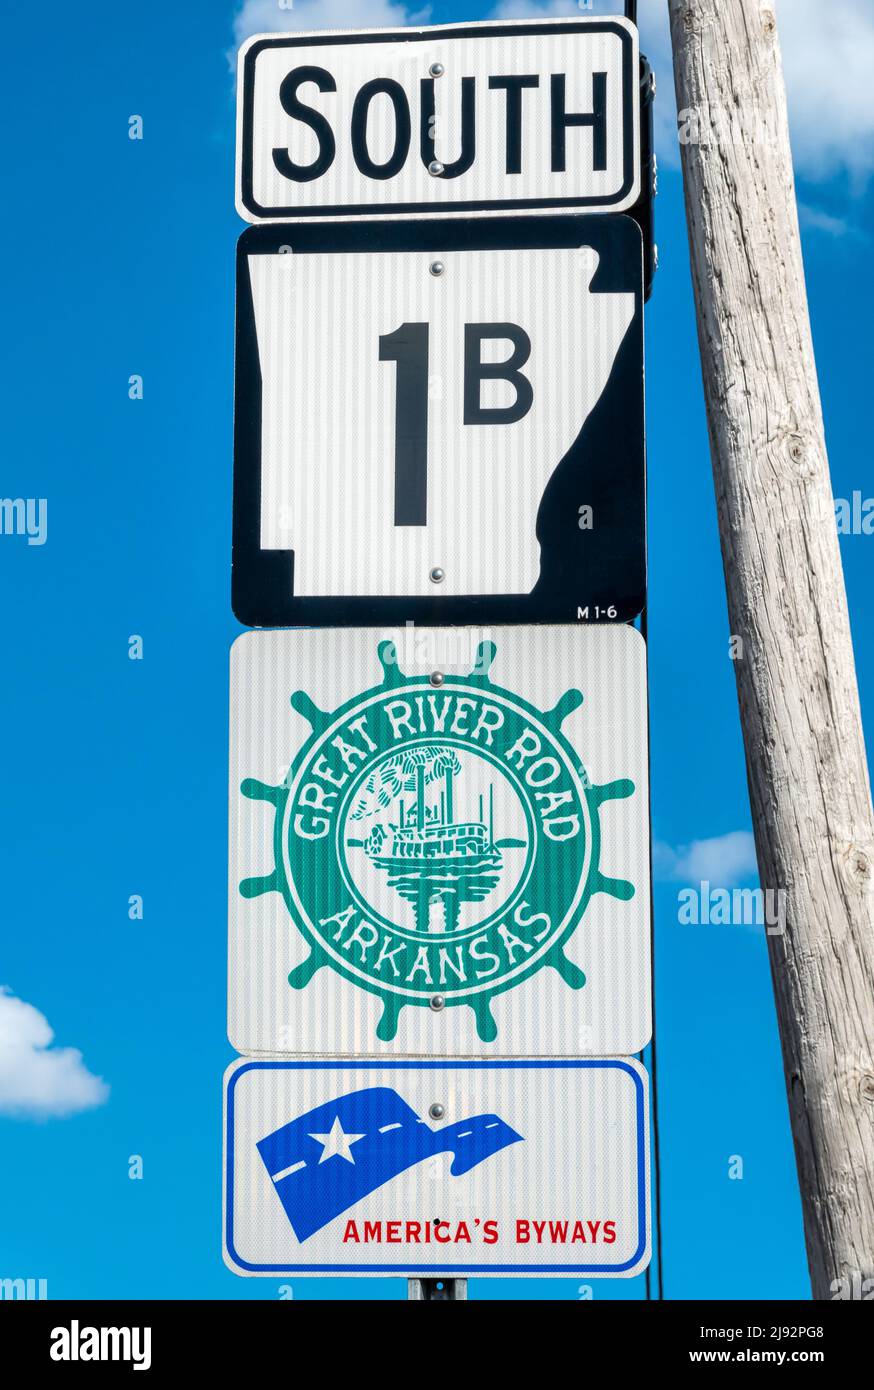 Great River Road National Scenic Byway Schild in Marianna Arkansas auf W Chestnut St. American Byways Schild. Stockfoto